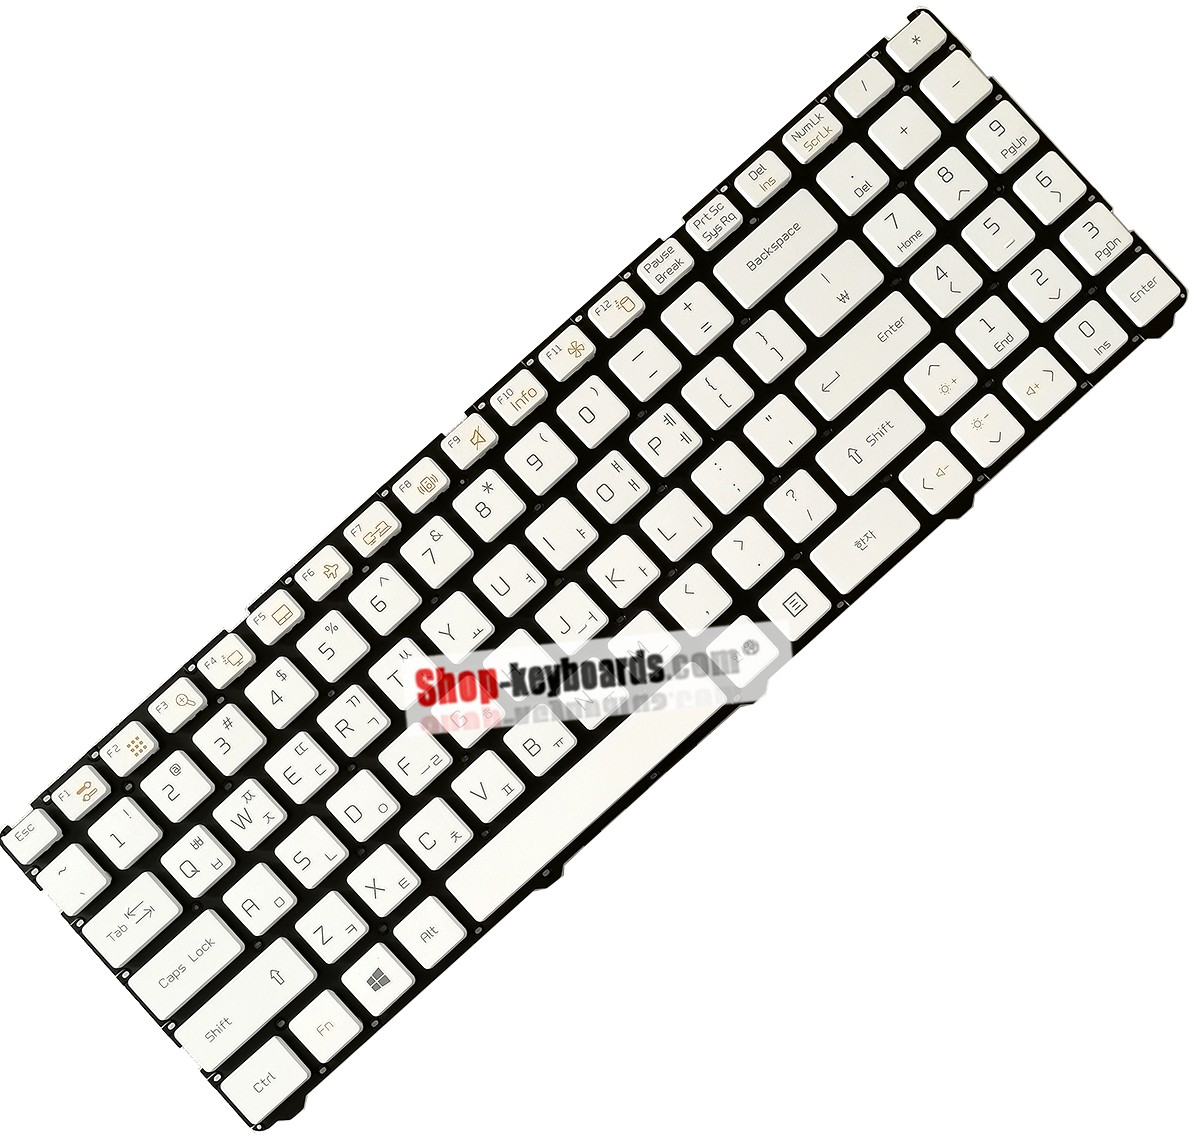 LG MP-12K73P0-9207 Keyboard replacement